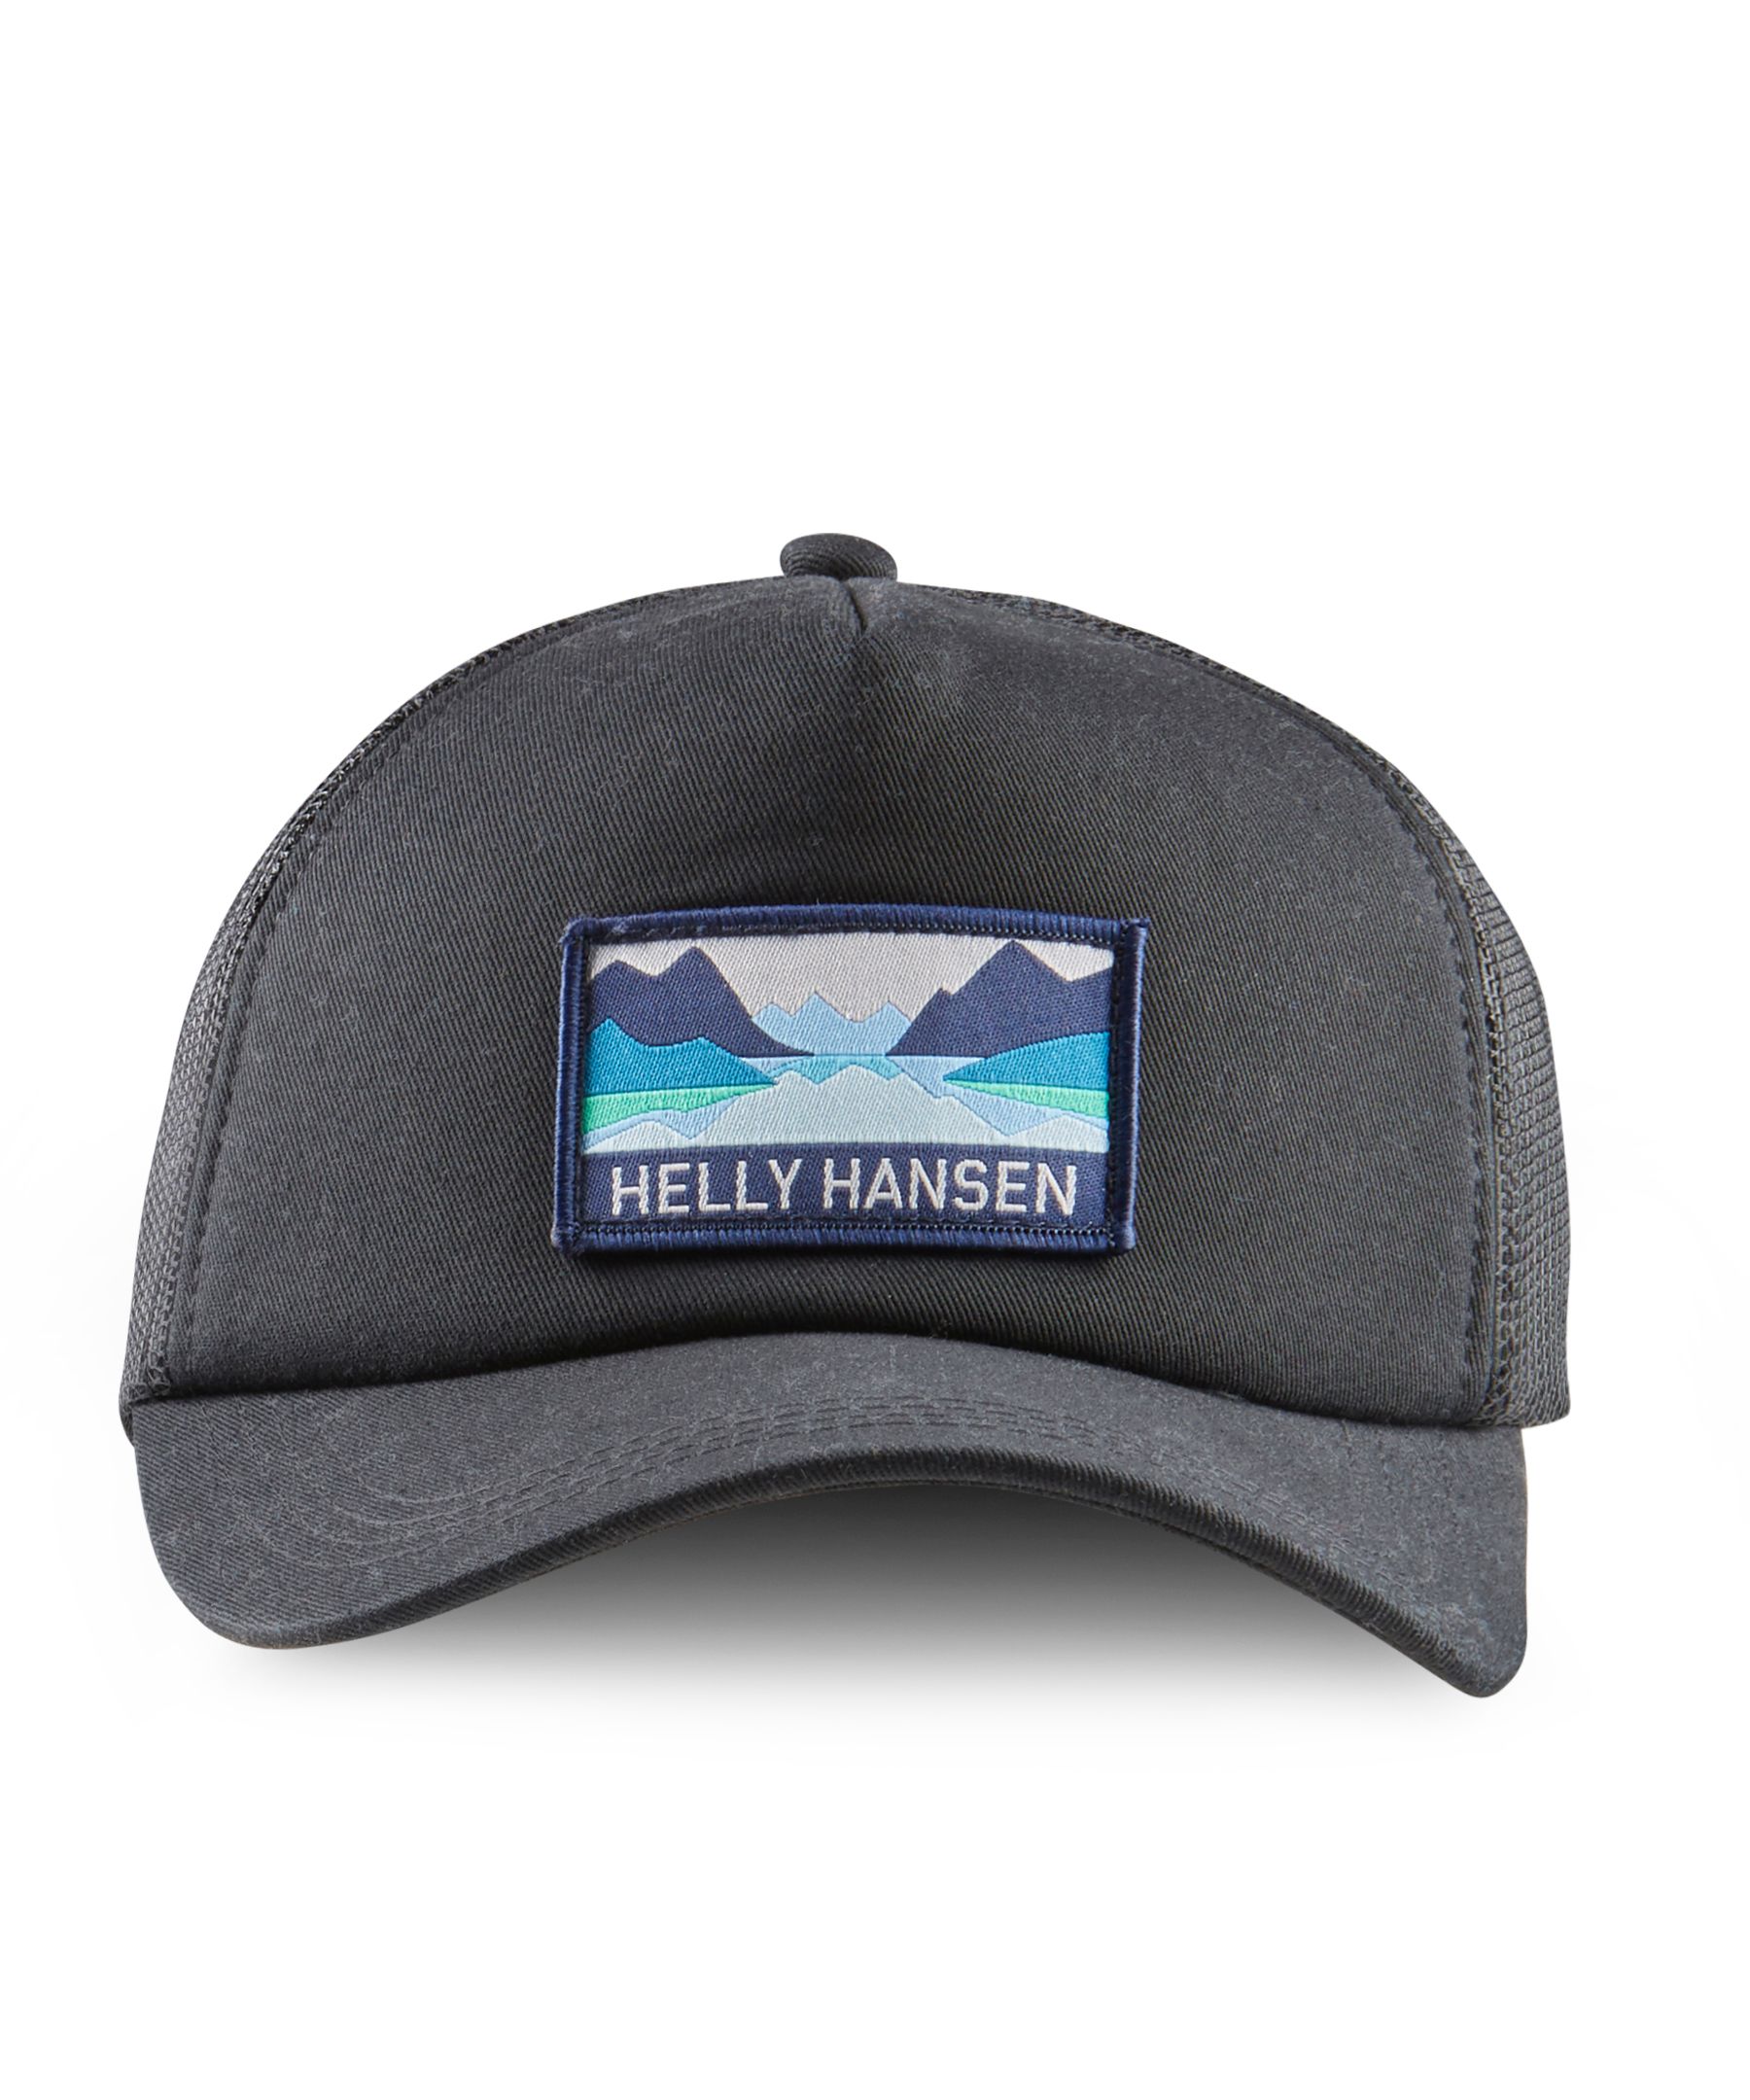 Helly Hansen Men's Trucker Mesh Back Cap